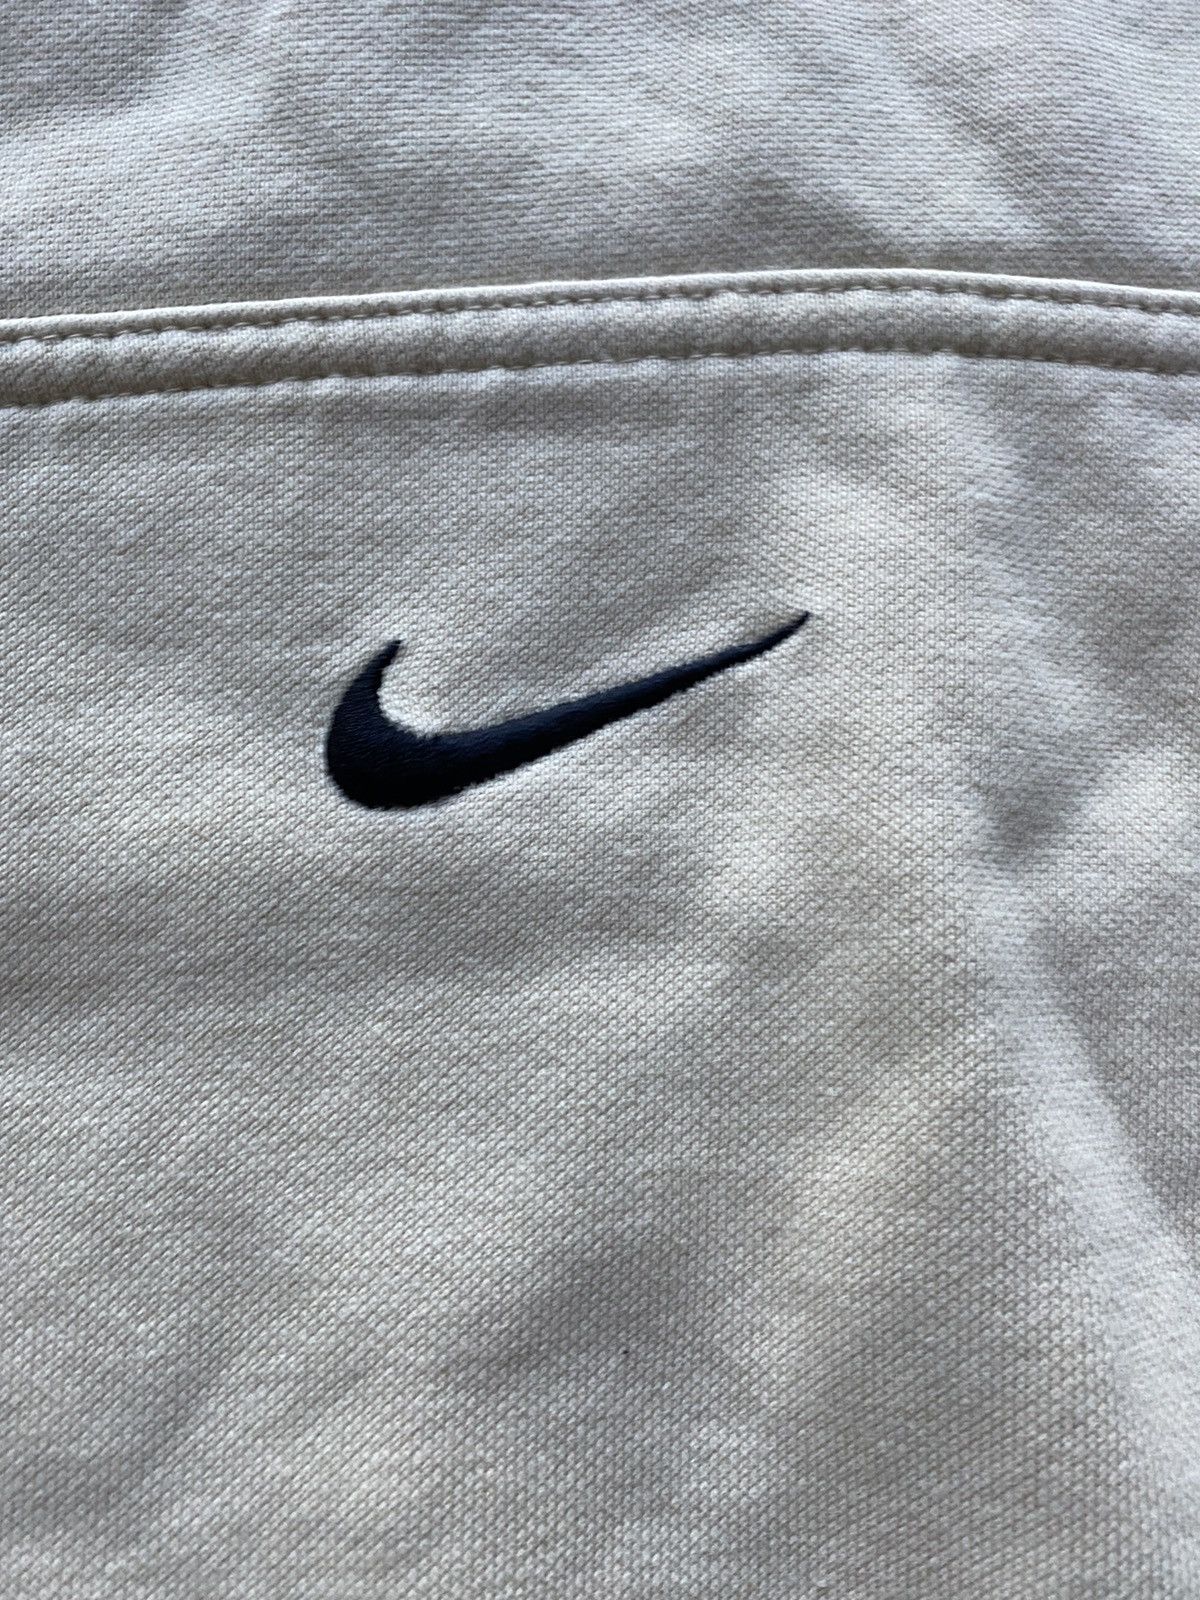 Nike Vintage Nike Raptors Hoodie Swoosh Sweatshirt Rare Size US L / EU 52-54 / 3 - 2 Preview